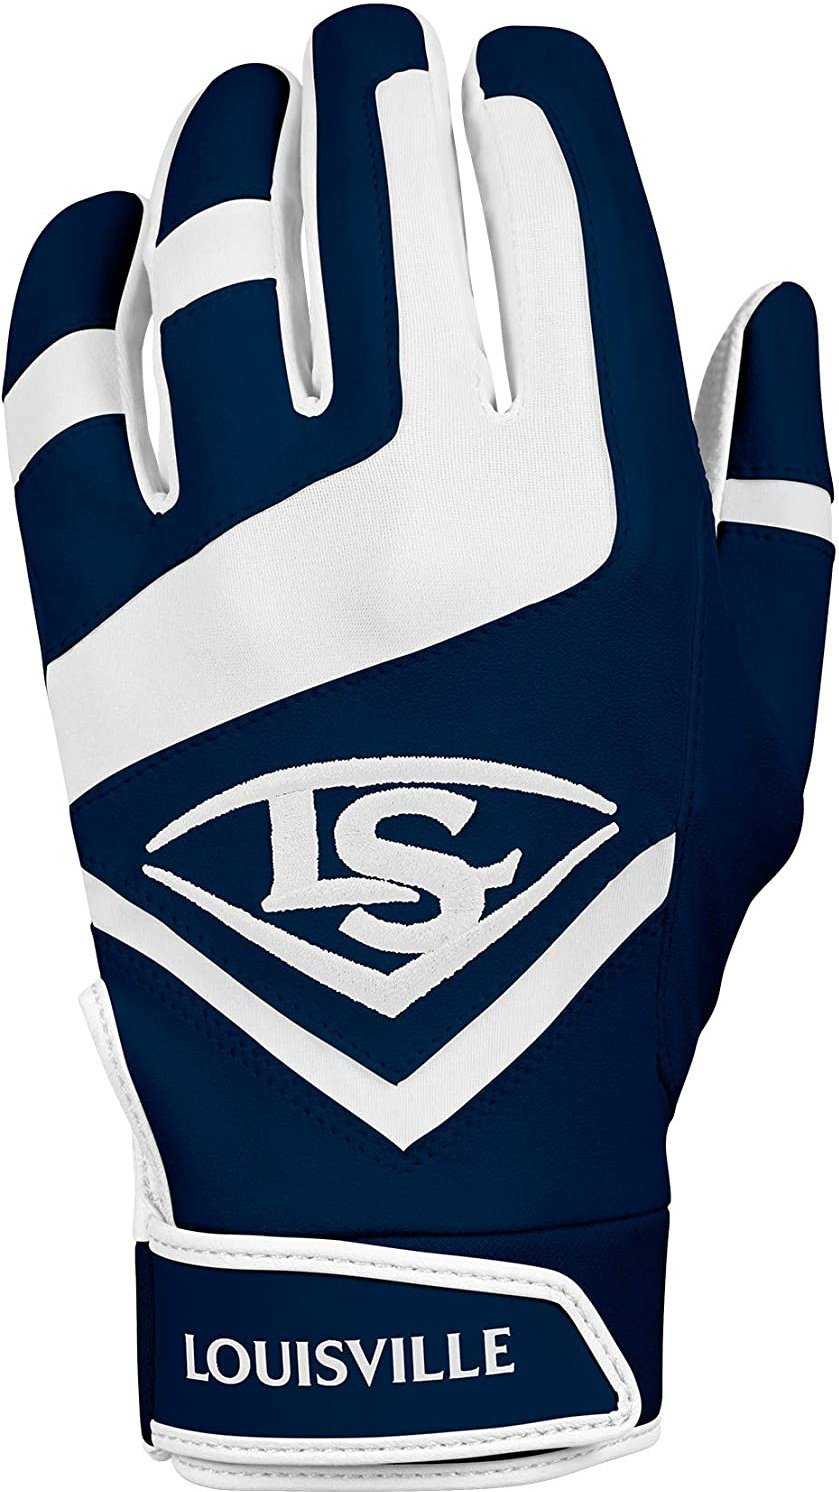 Louisville Slugger Genuine Batting Gloves - Navy - HIT a Double - 2